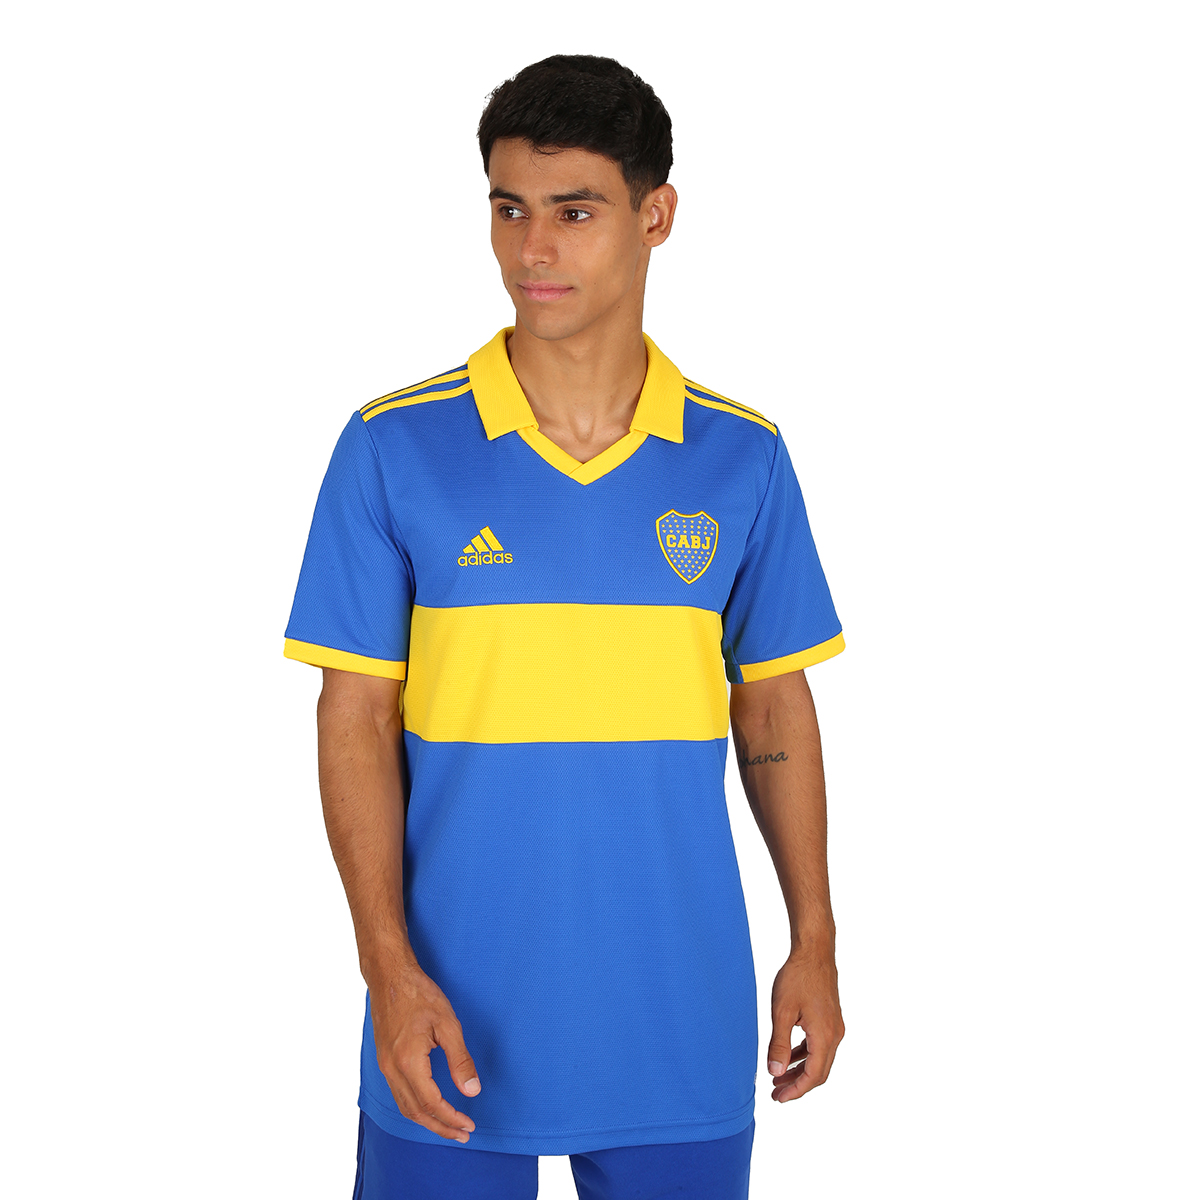 himno Nacional Humano recluta Camiseta adidas Boca Juniors | Dexter